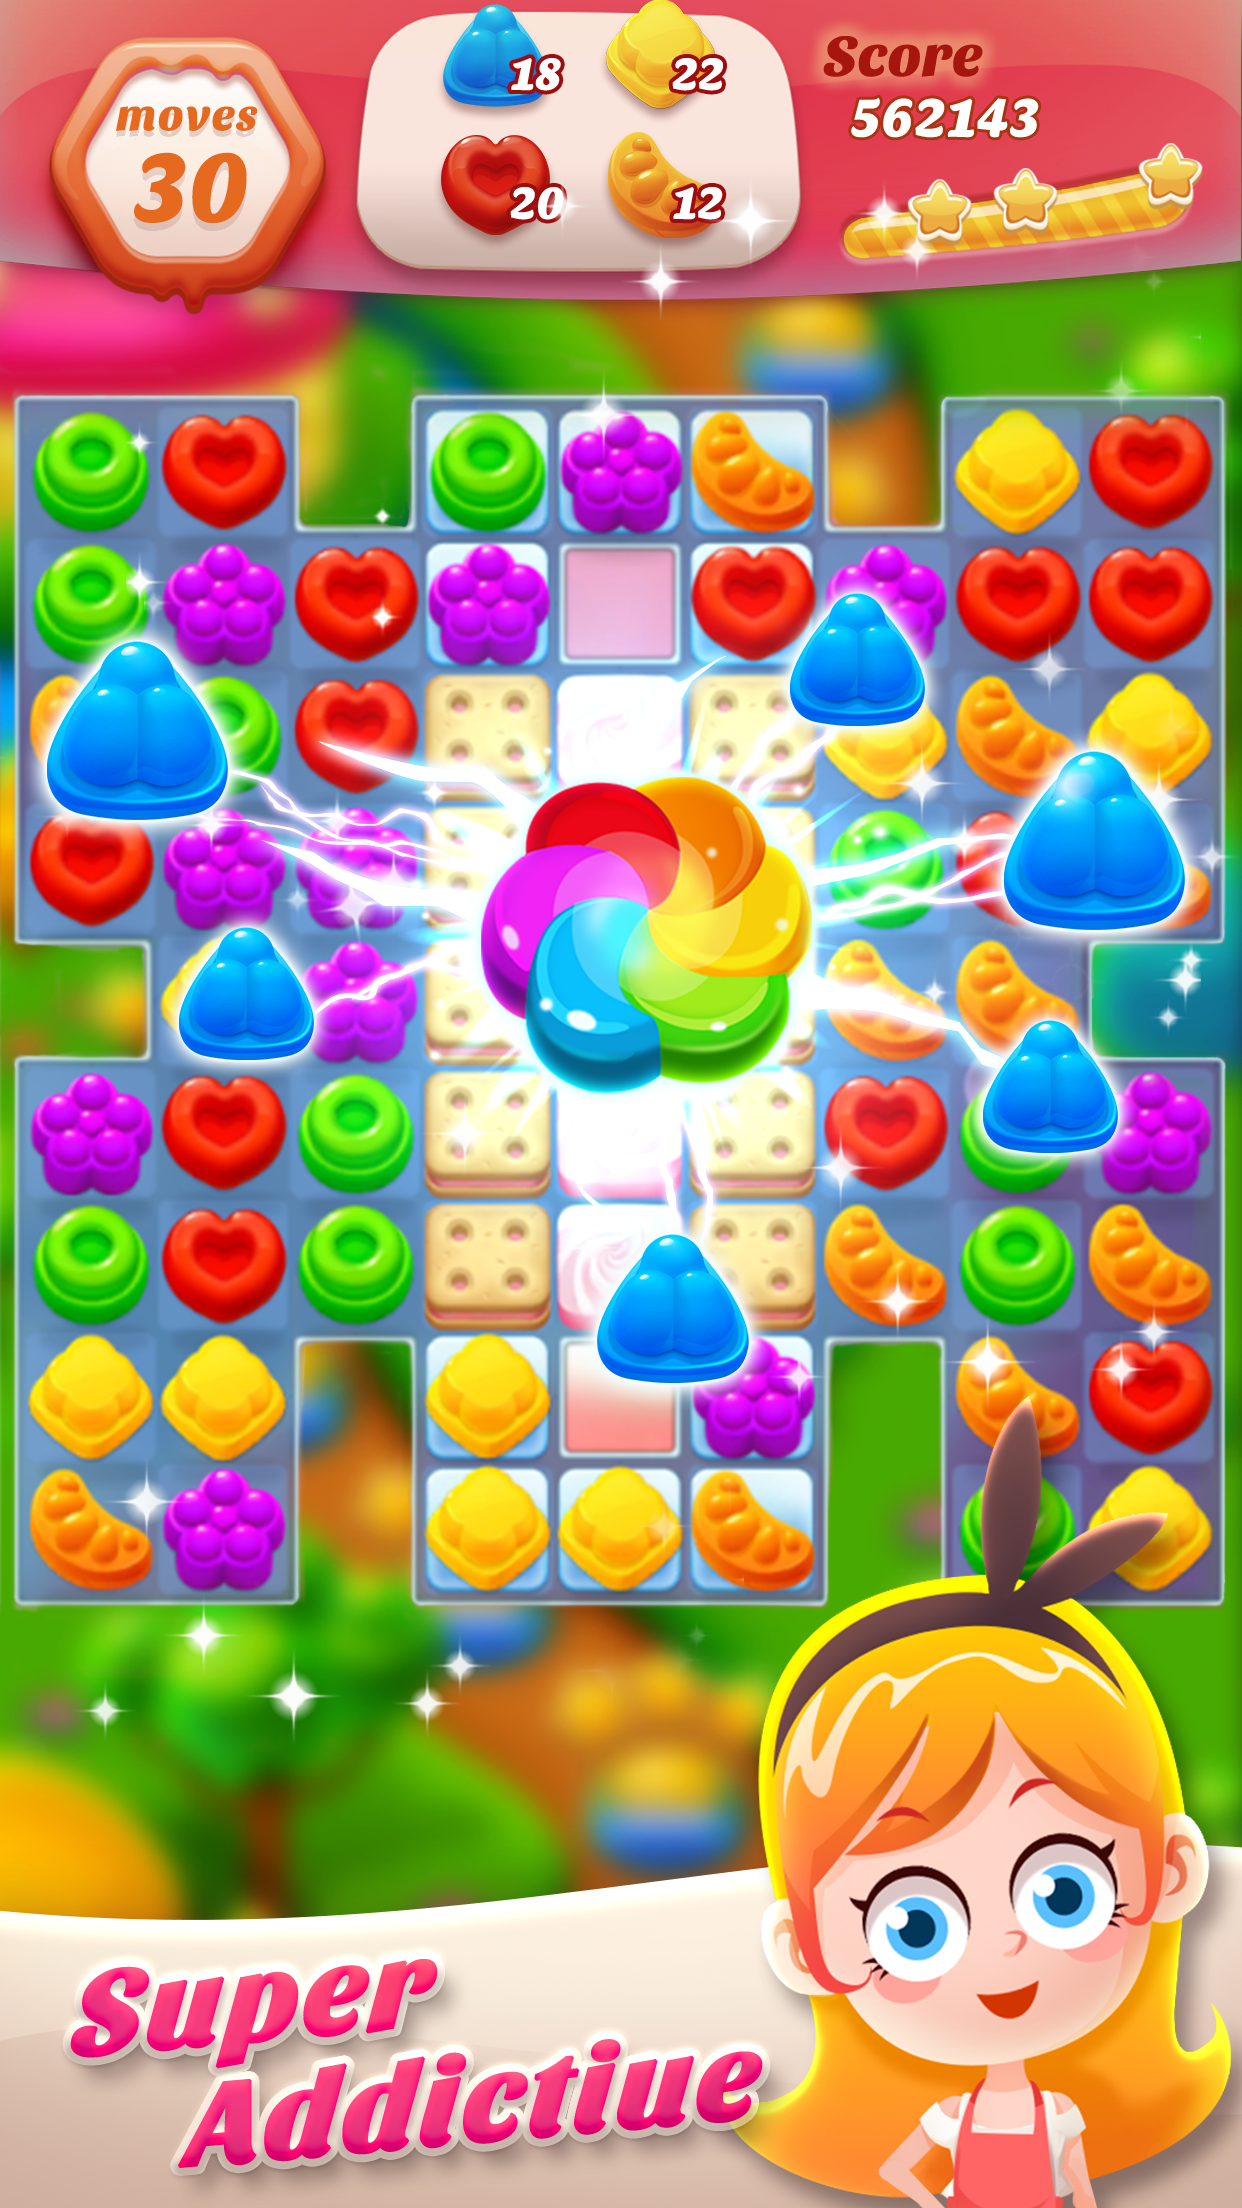 Screenshot 1 of Jelly Crush - เกมจับคู่ 3 ตัวและปริศนาฟรี 2019 1.0.6